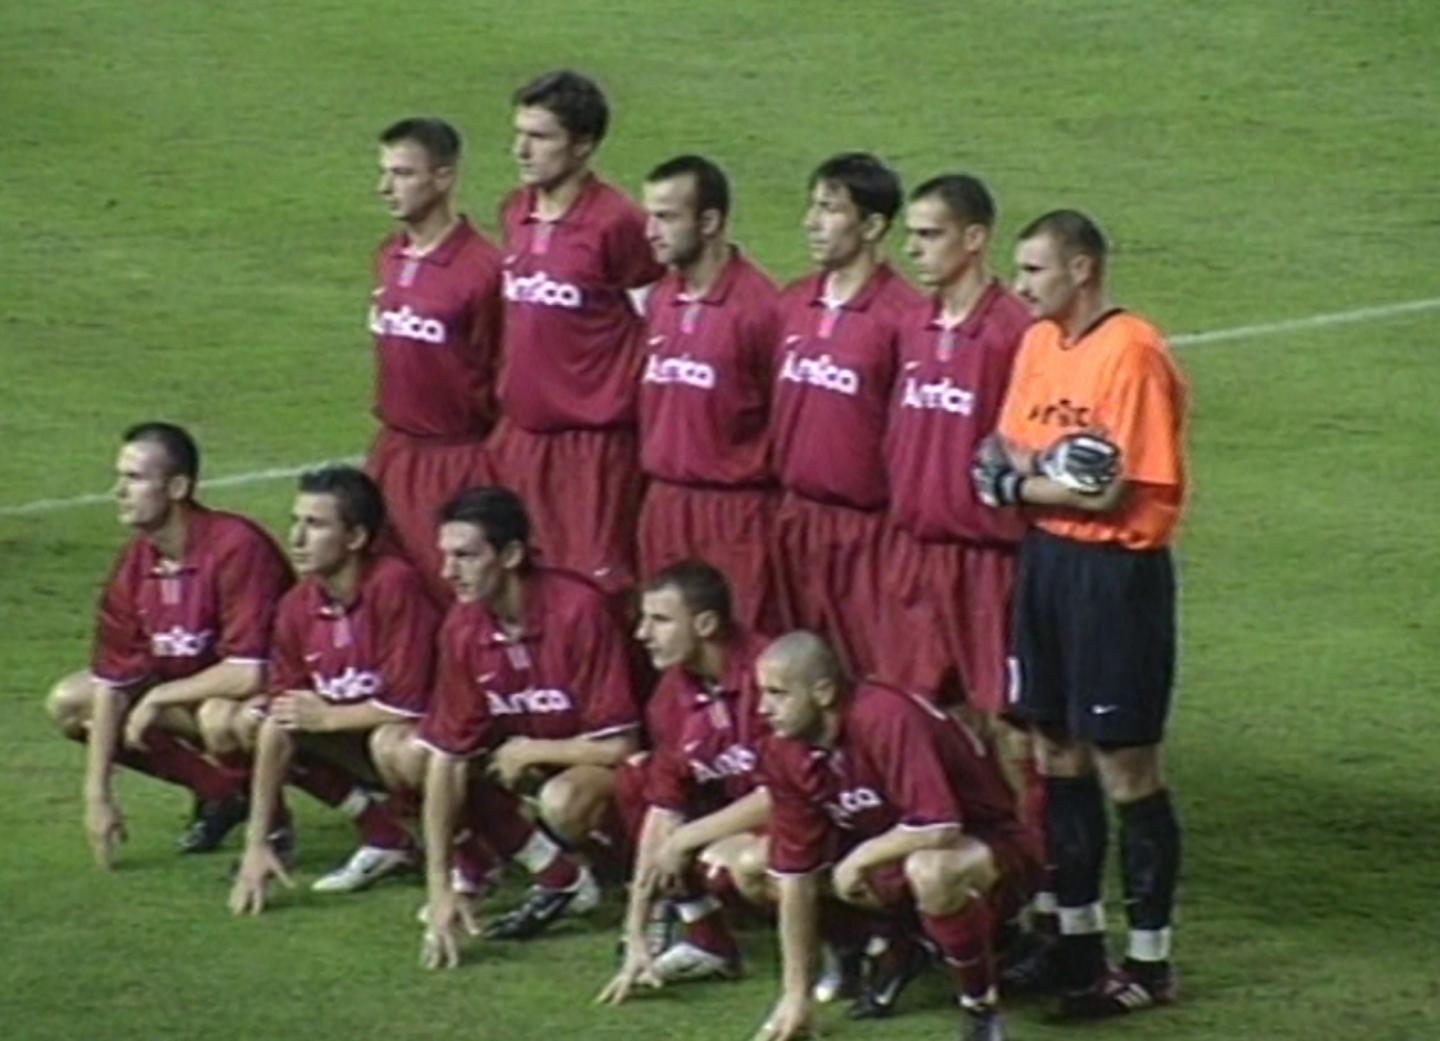 Malaga CF - Amica Wronki 2:1 (31.10.2002)